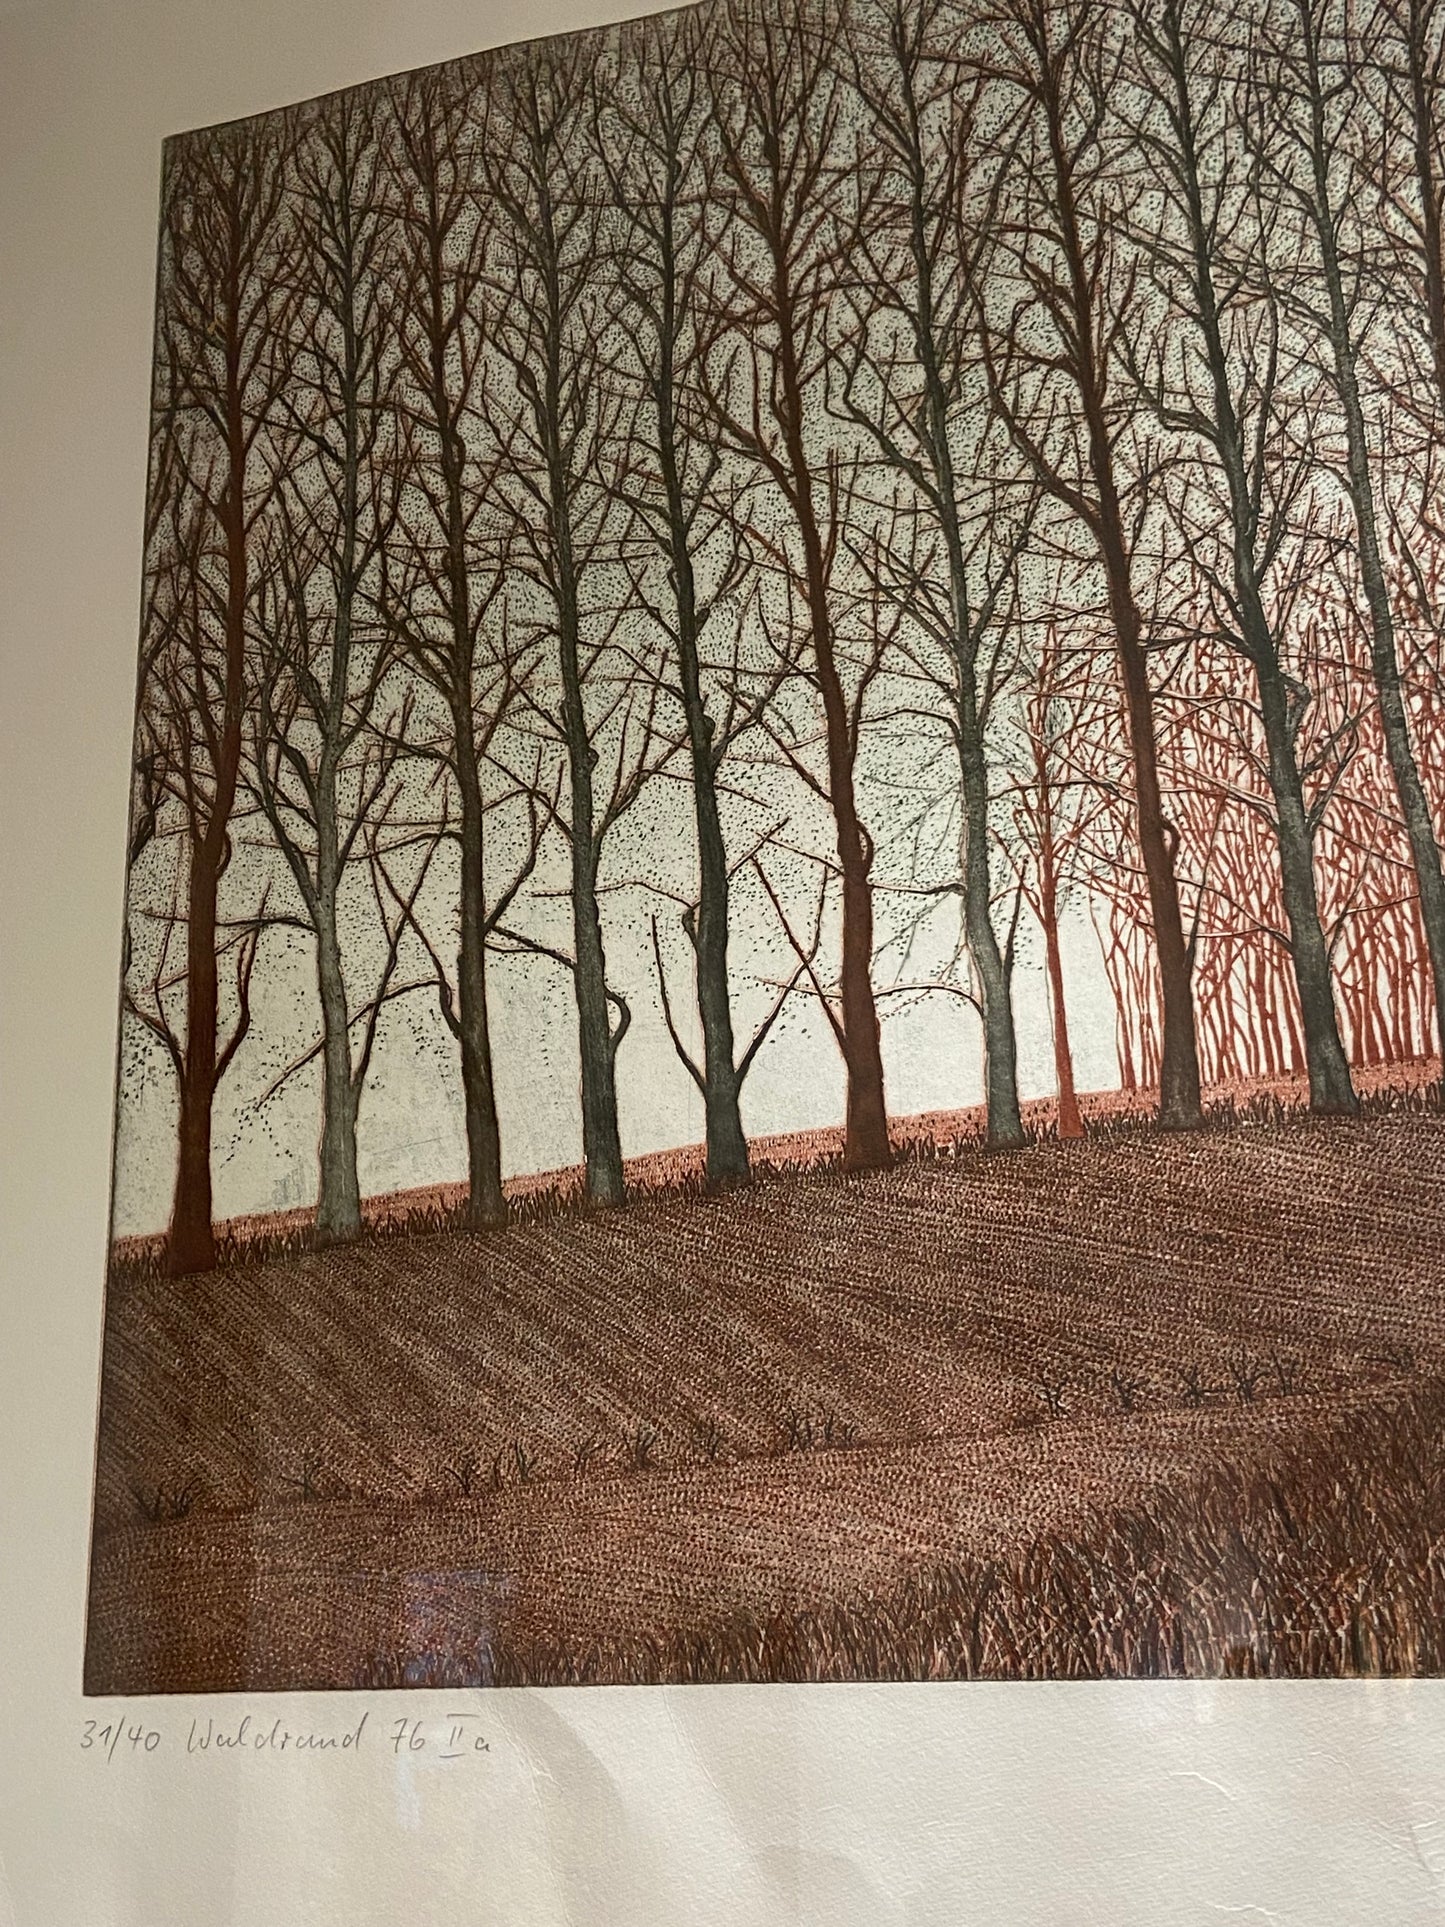 Peter Rediker Birch Trees (24056)